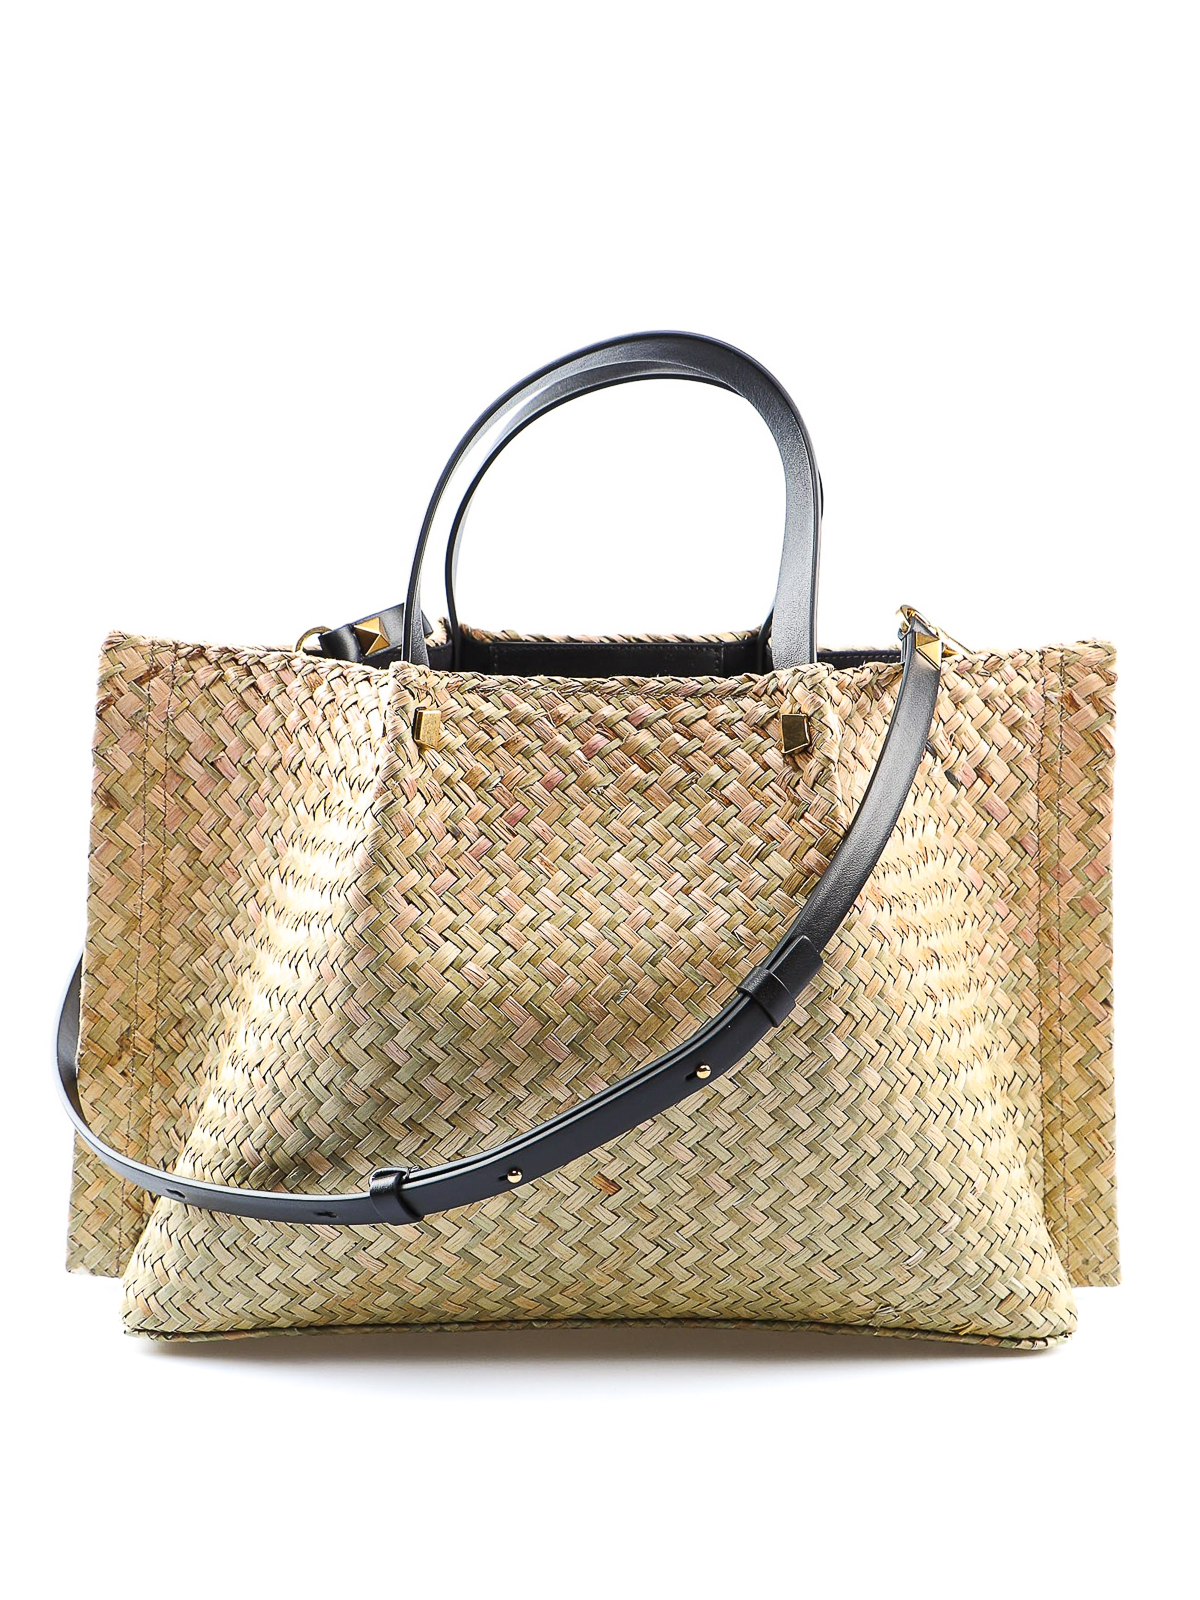 Medium v logo leather tote bag - Valentino Garavani - Women